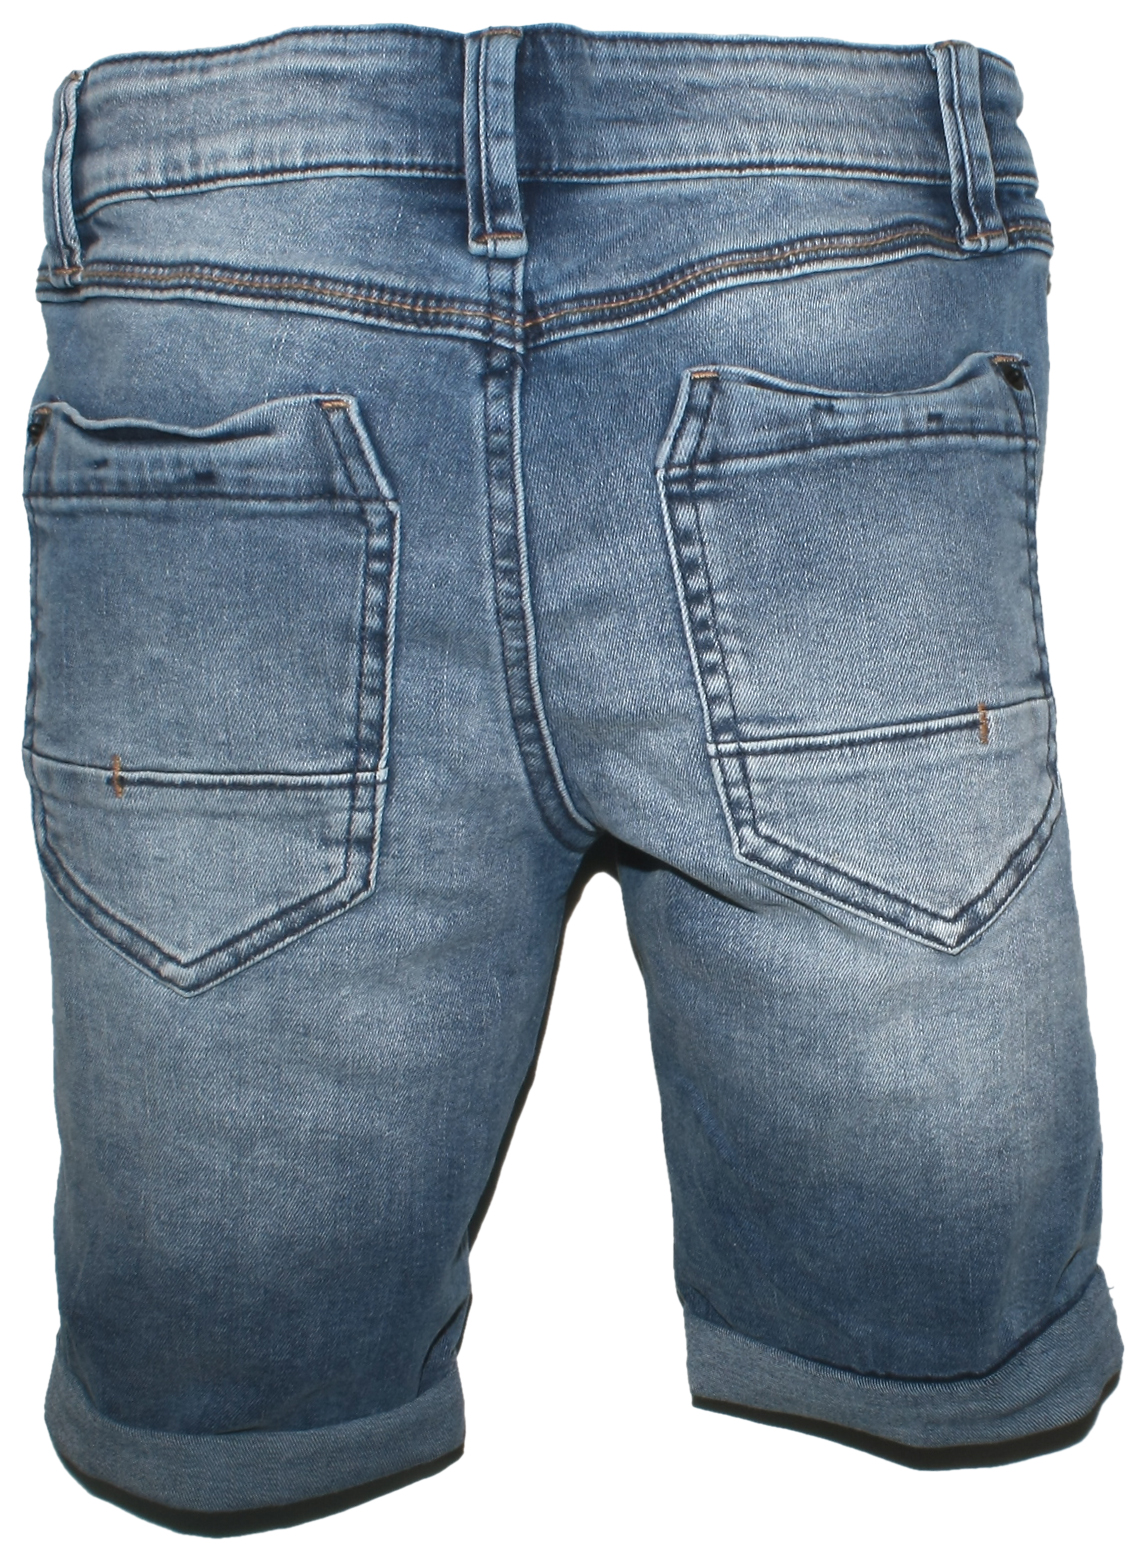 S.Oliver, Big Jeanshose, Destroyed KJ Super Jeans, Fashion | Jeans, Weite, Jeansshorts, Stretch Bermuda, kurze